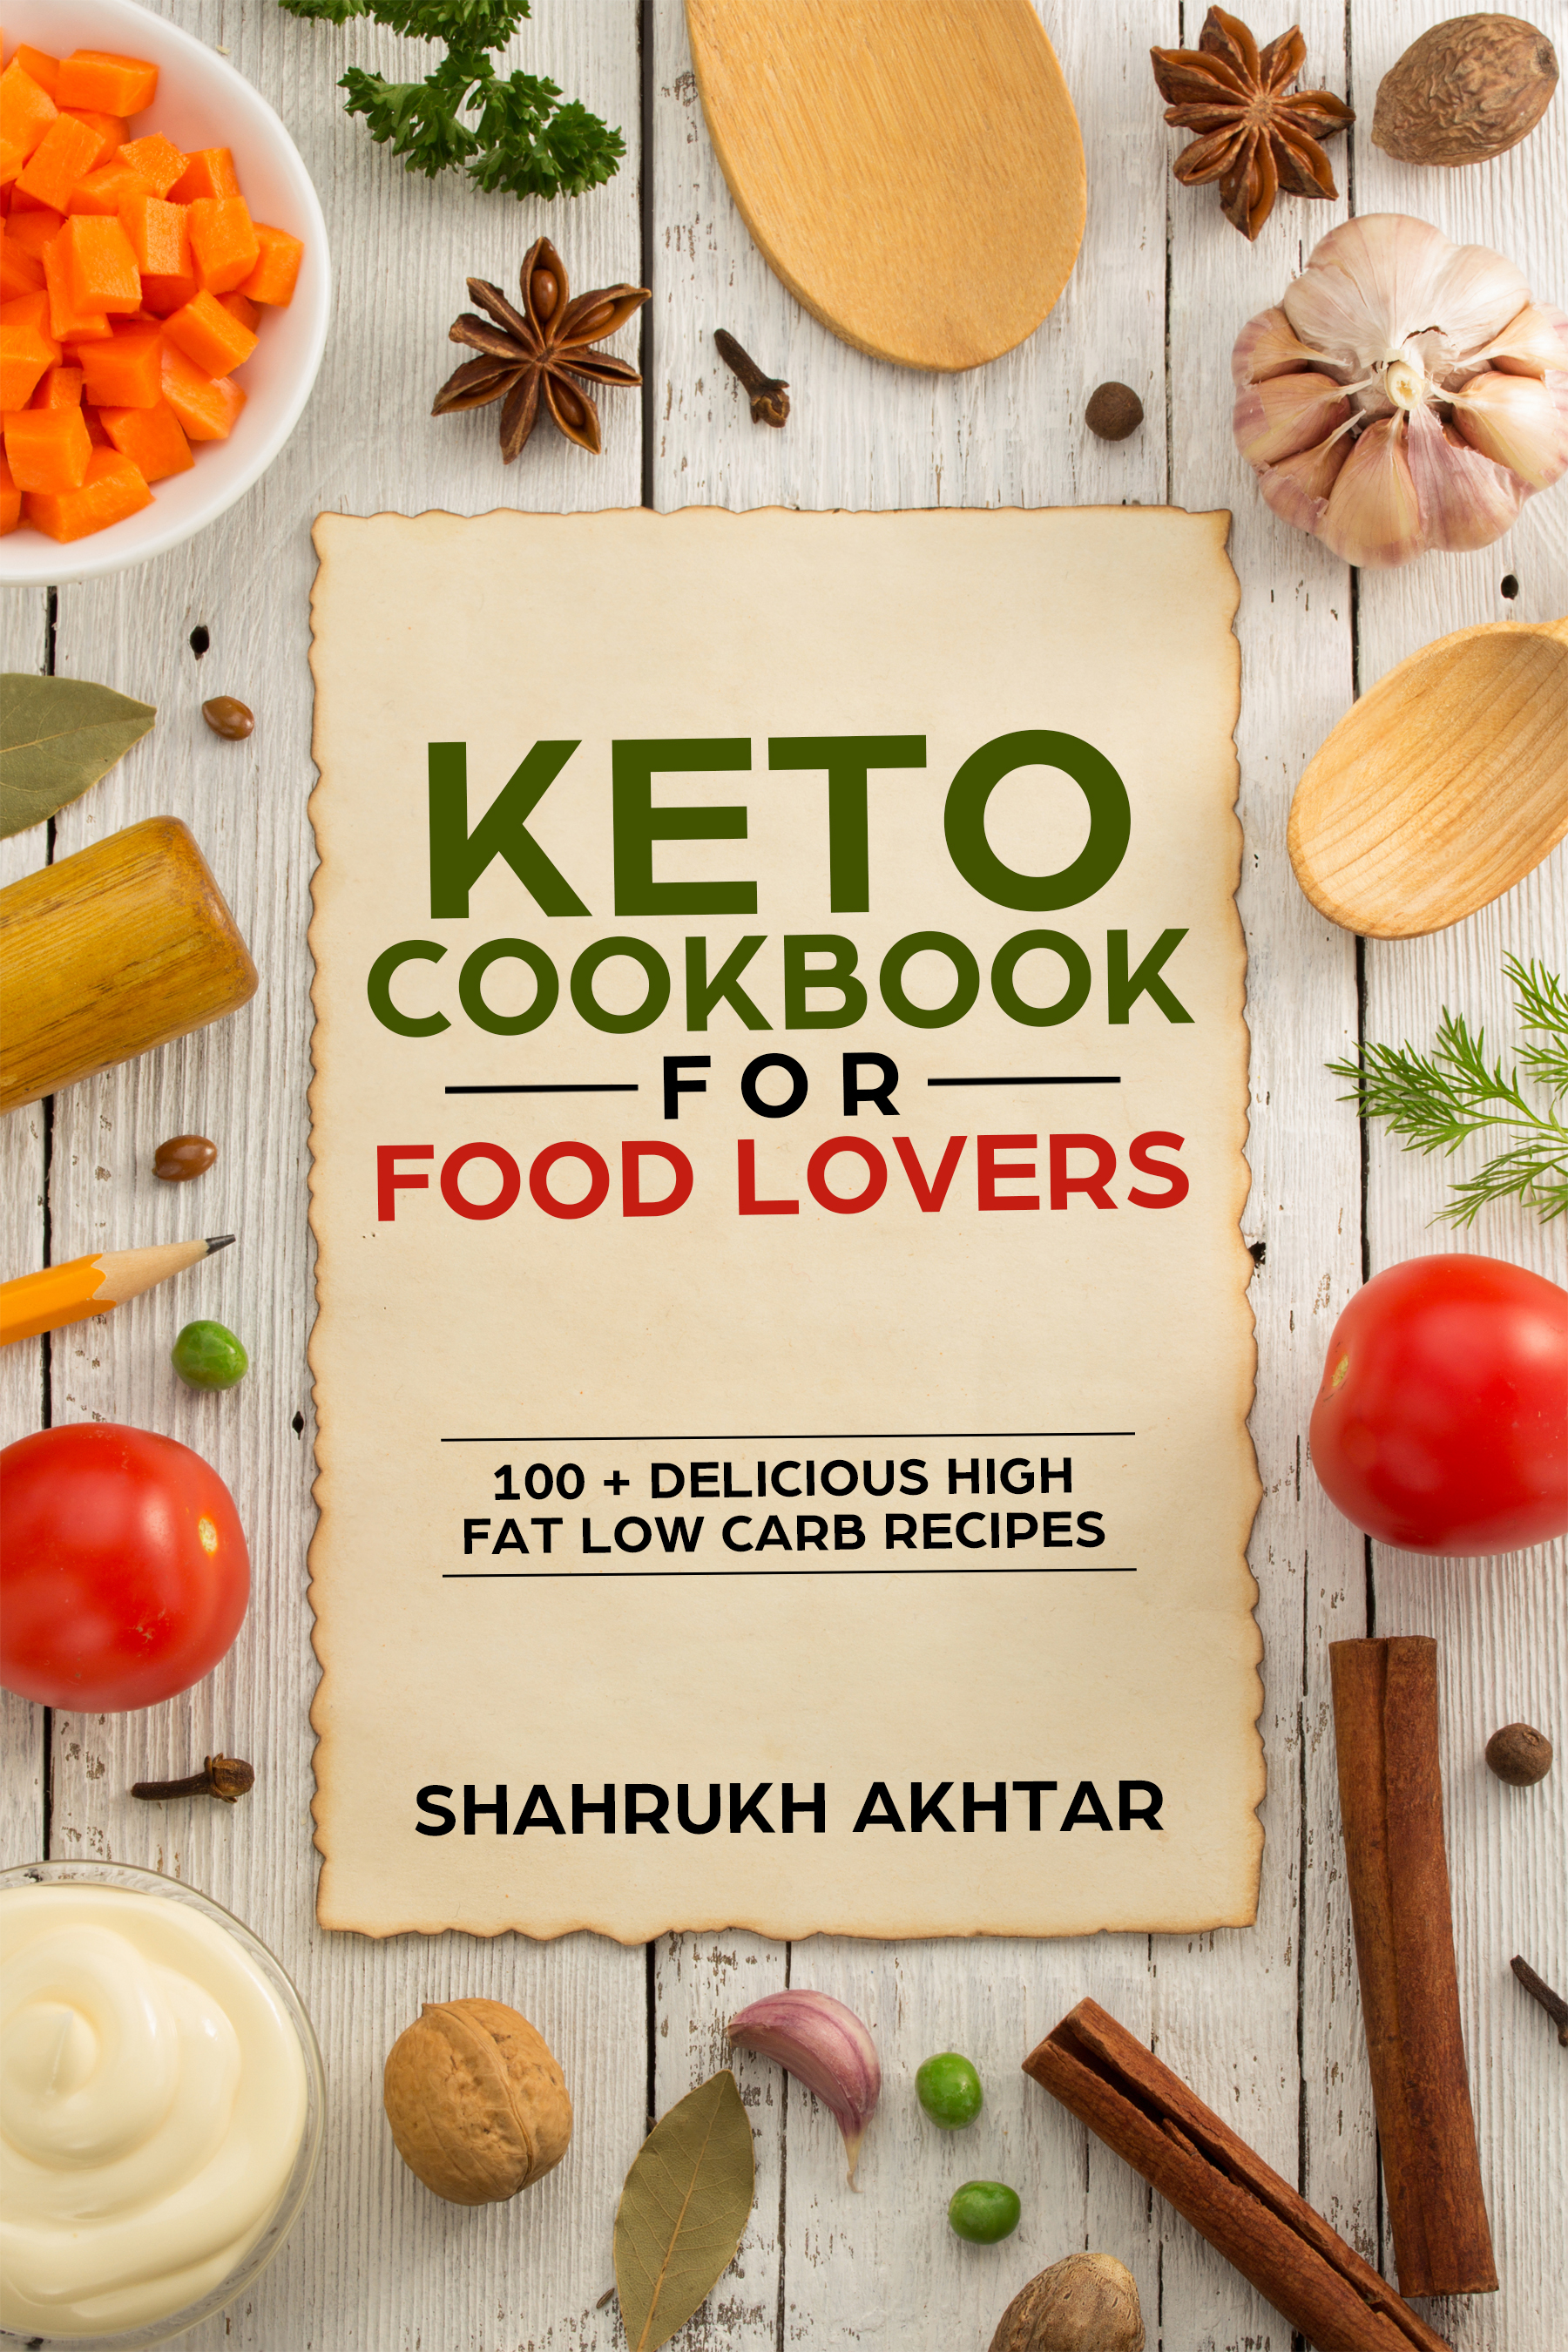 FREE: Keto cookbook by Shahrukh Akhtar